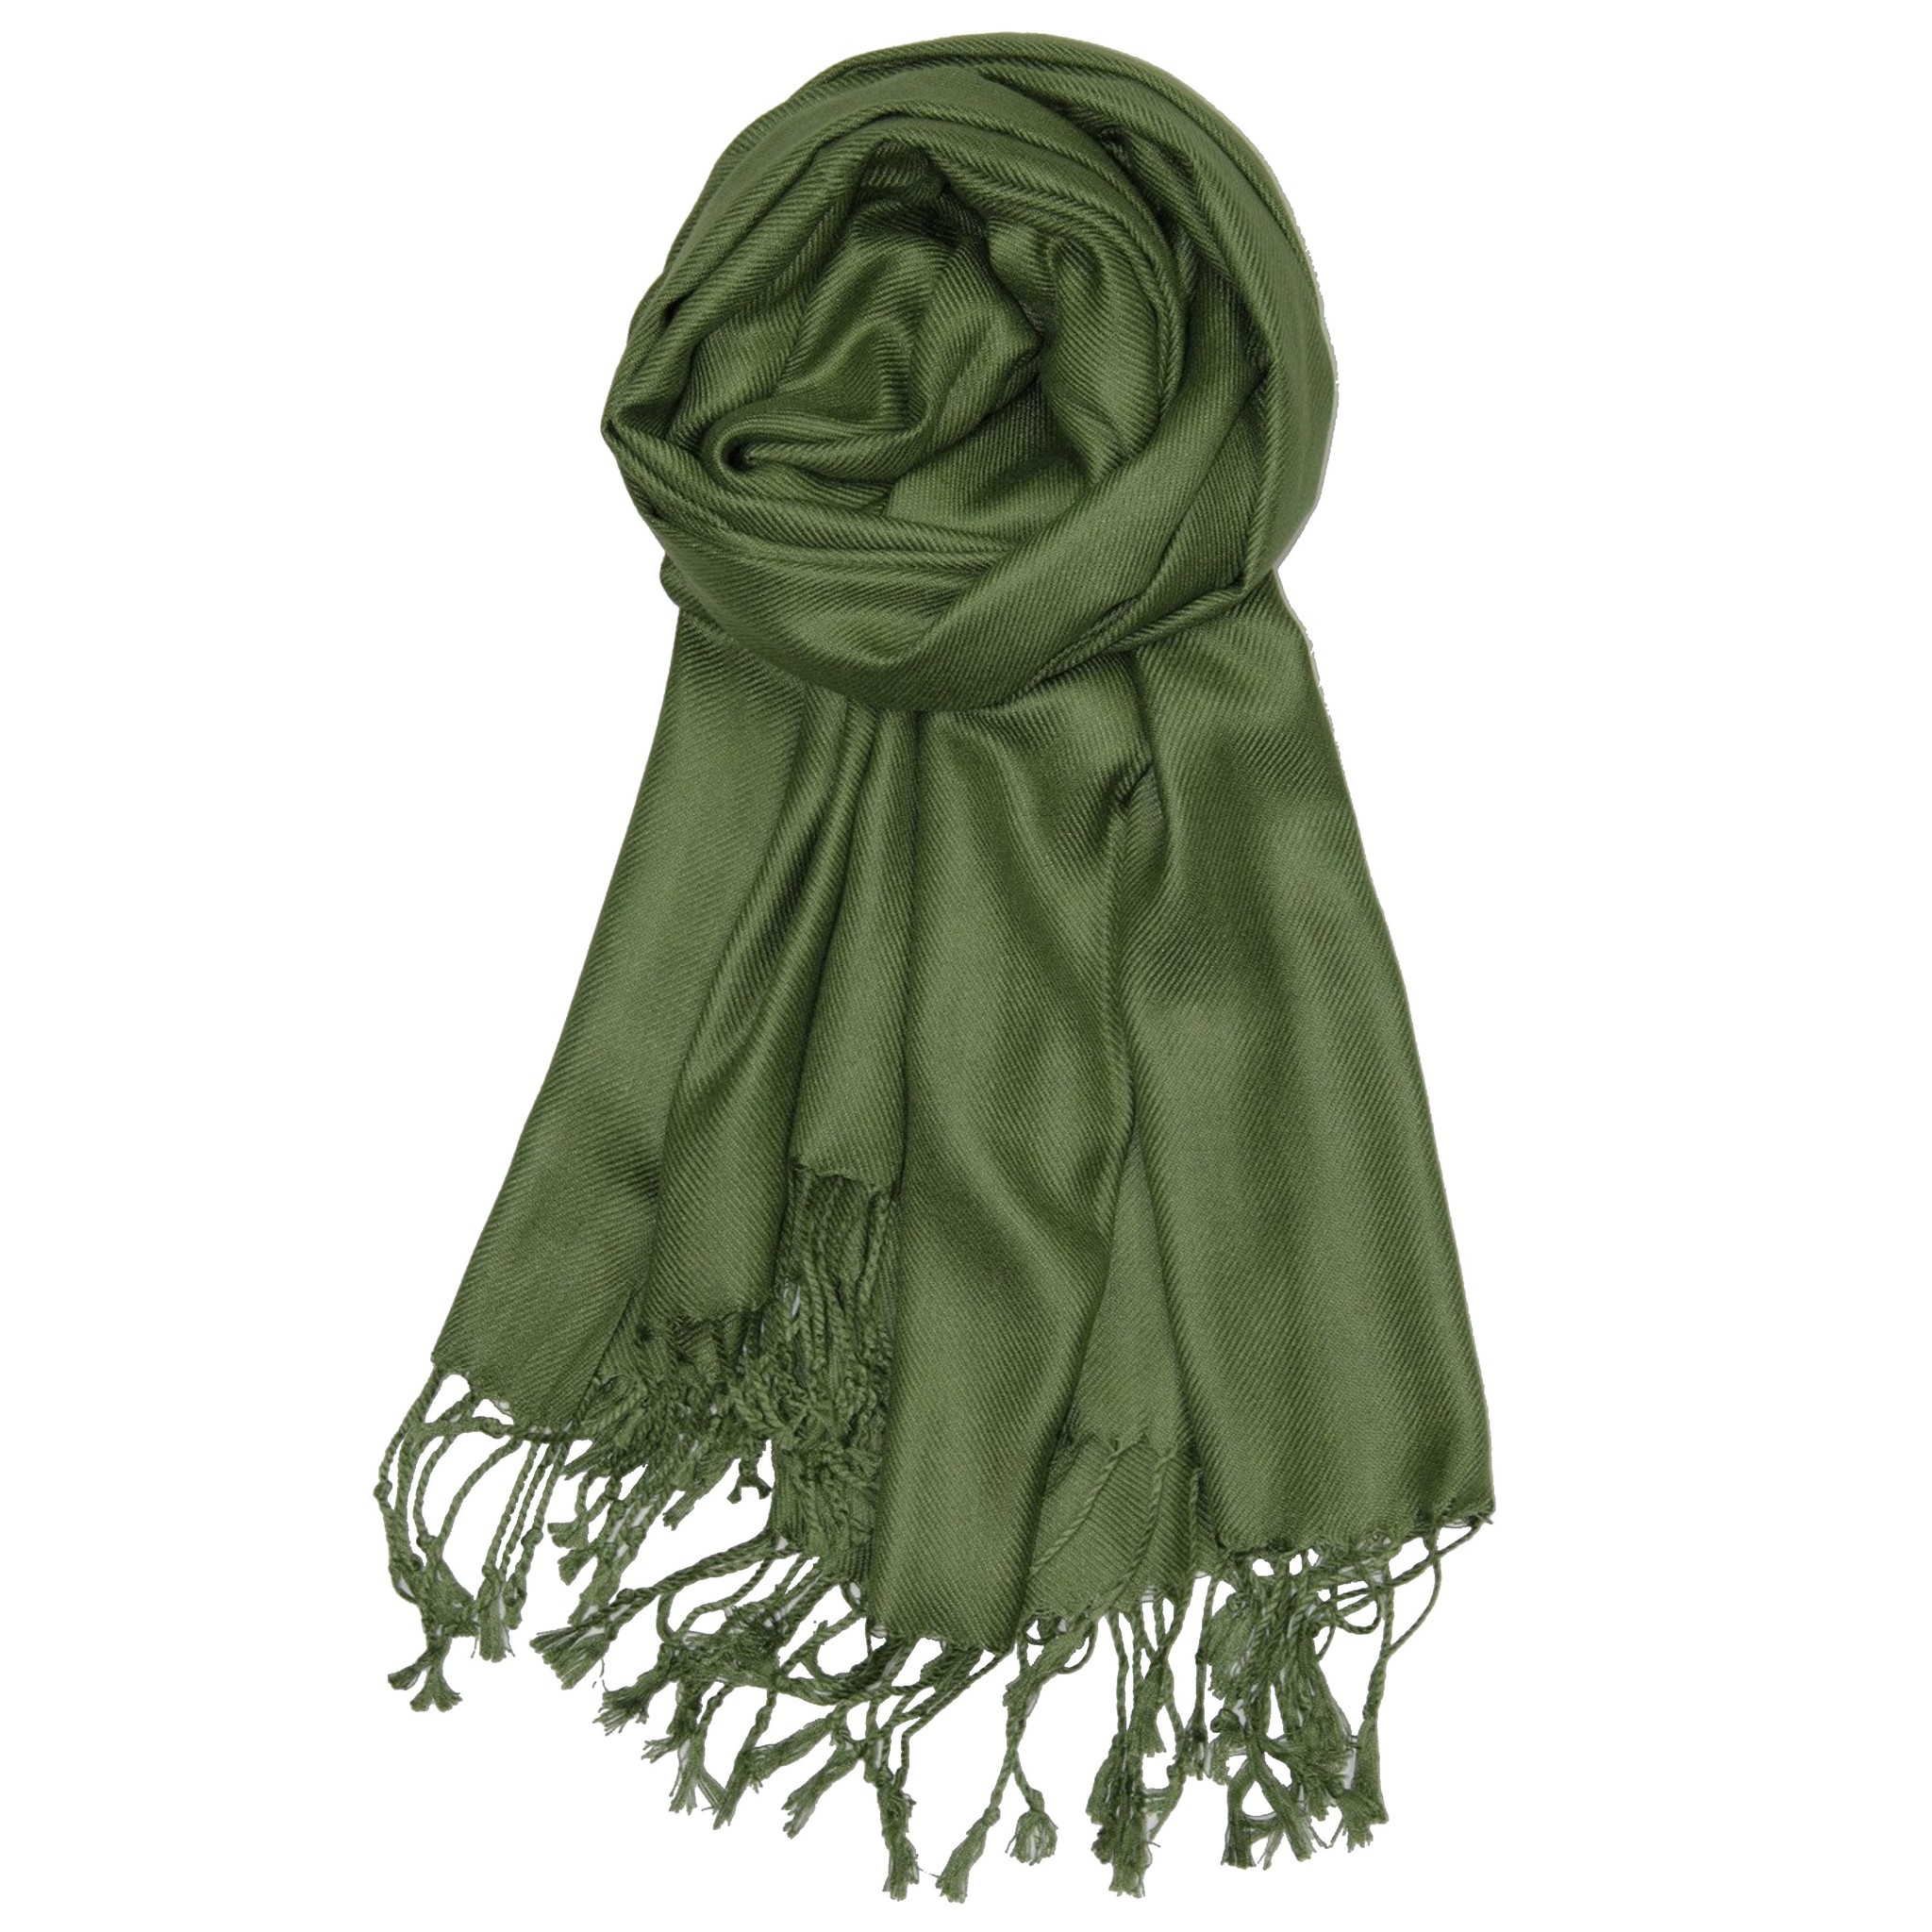 Оливковый шарф. Платок оливкового цвета.